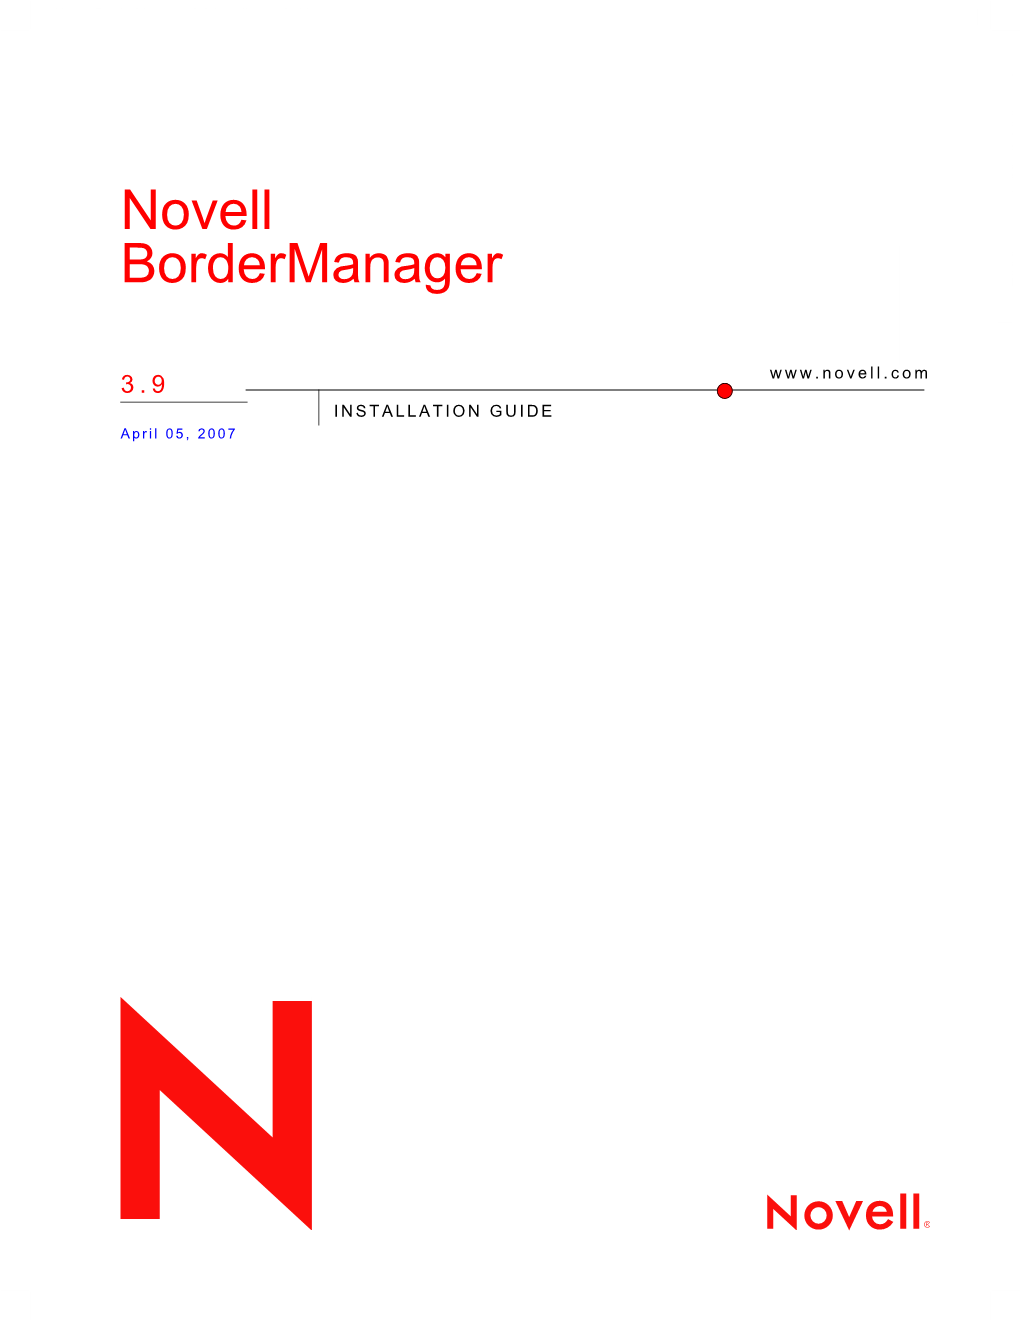 Novell Bordermanager 3.9 Installation Guide Novdocx (ENU) 29 January 2007